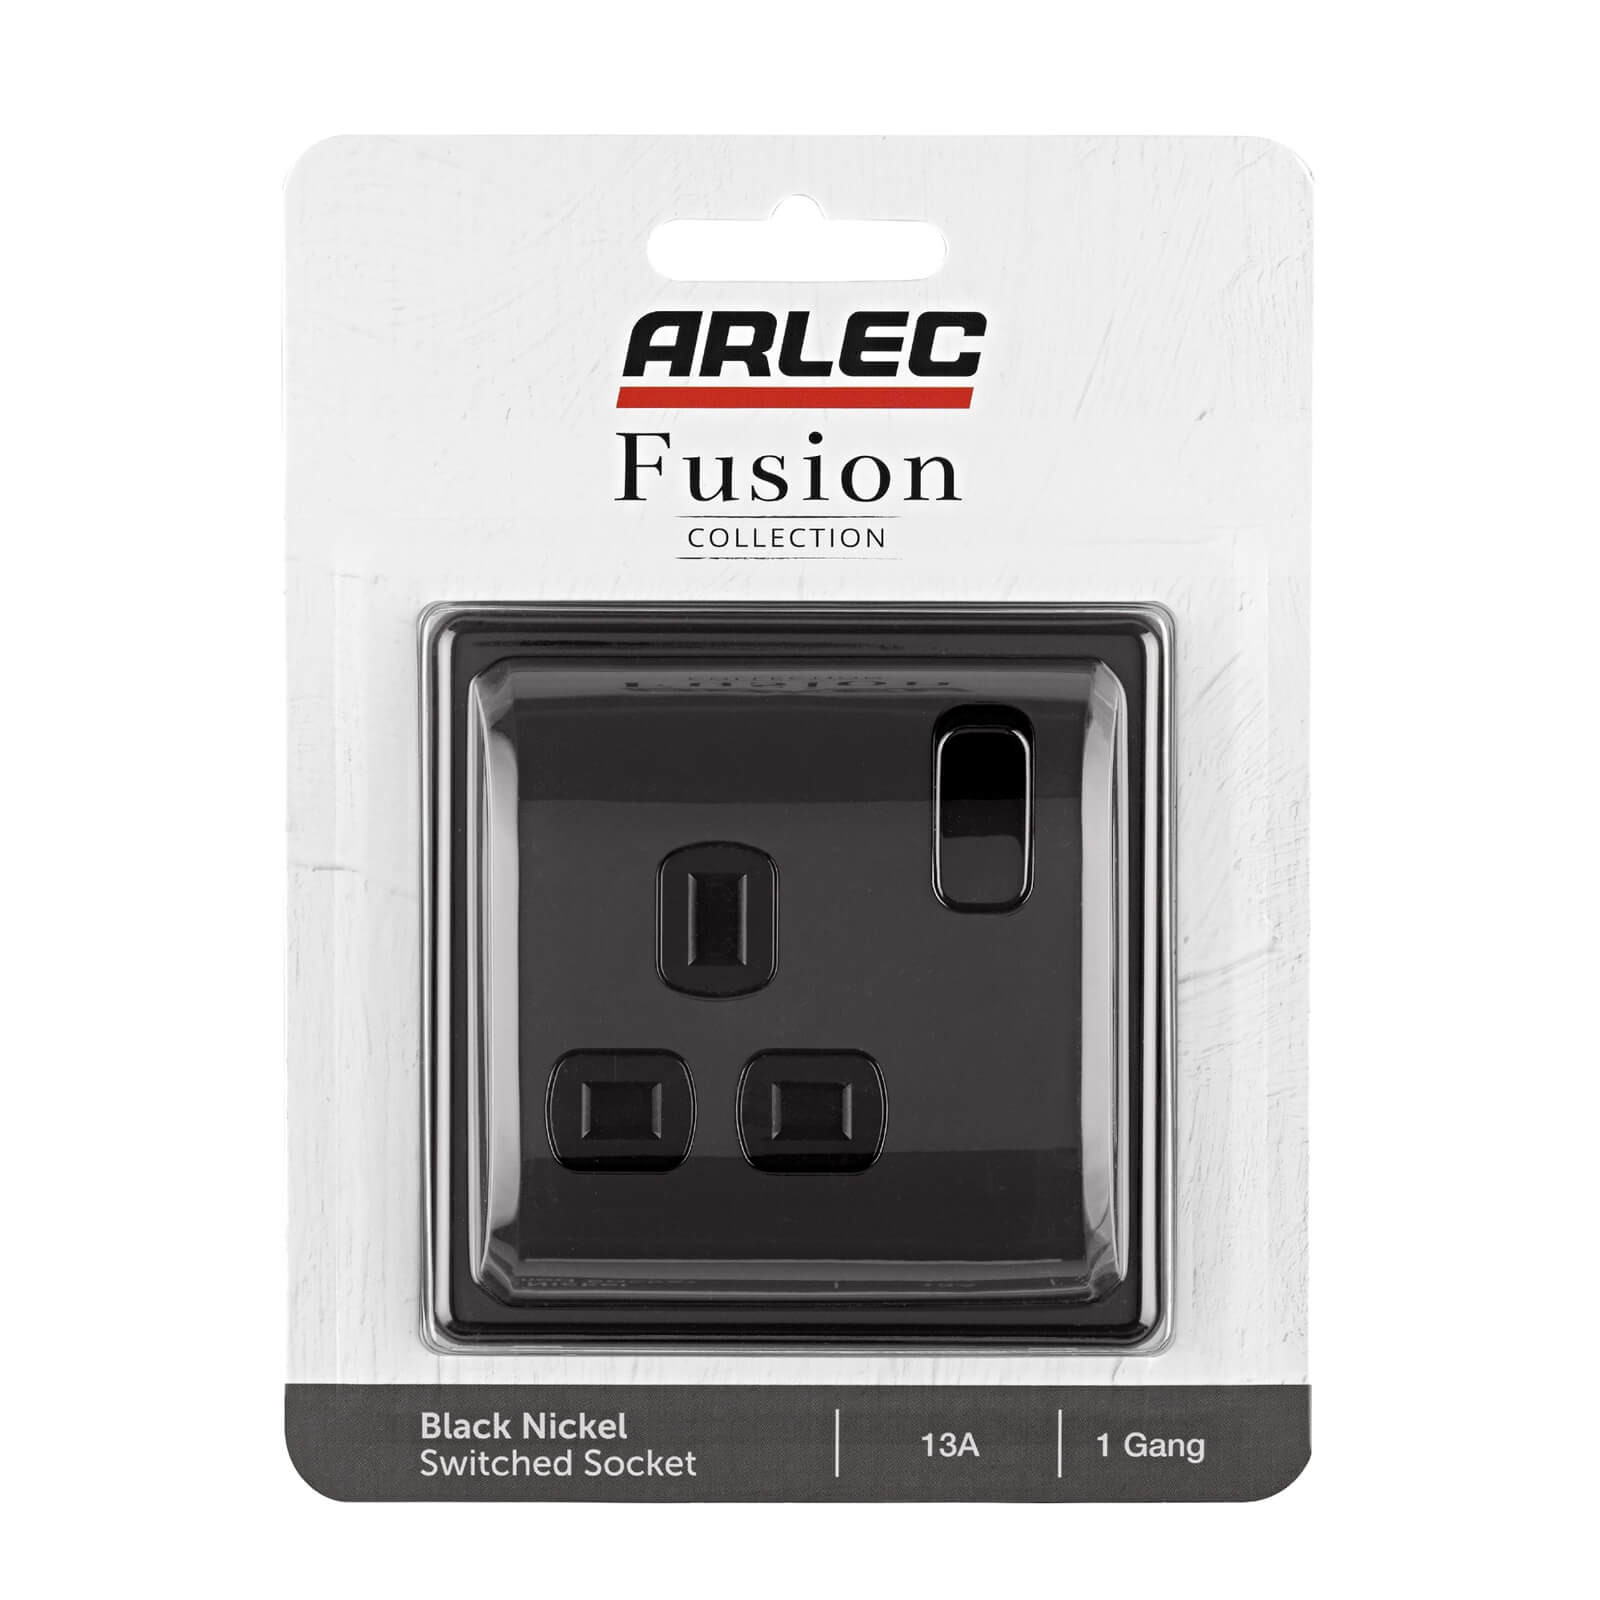 Arlec Fusion 13A 1 Gang Black Nickel Single switched socket